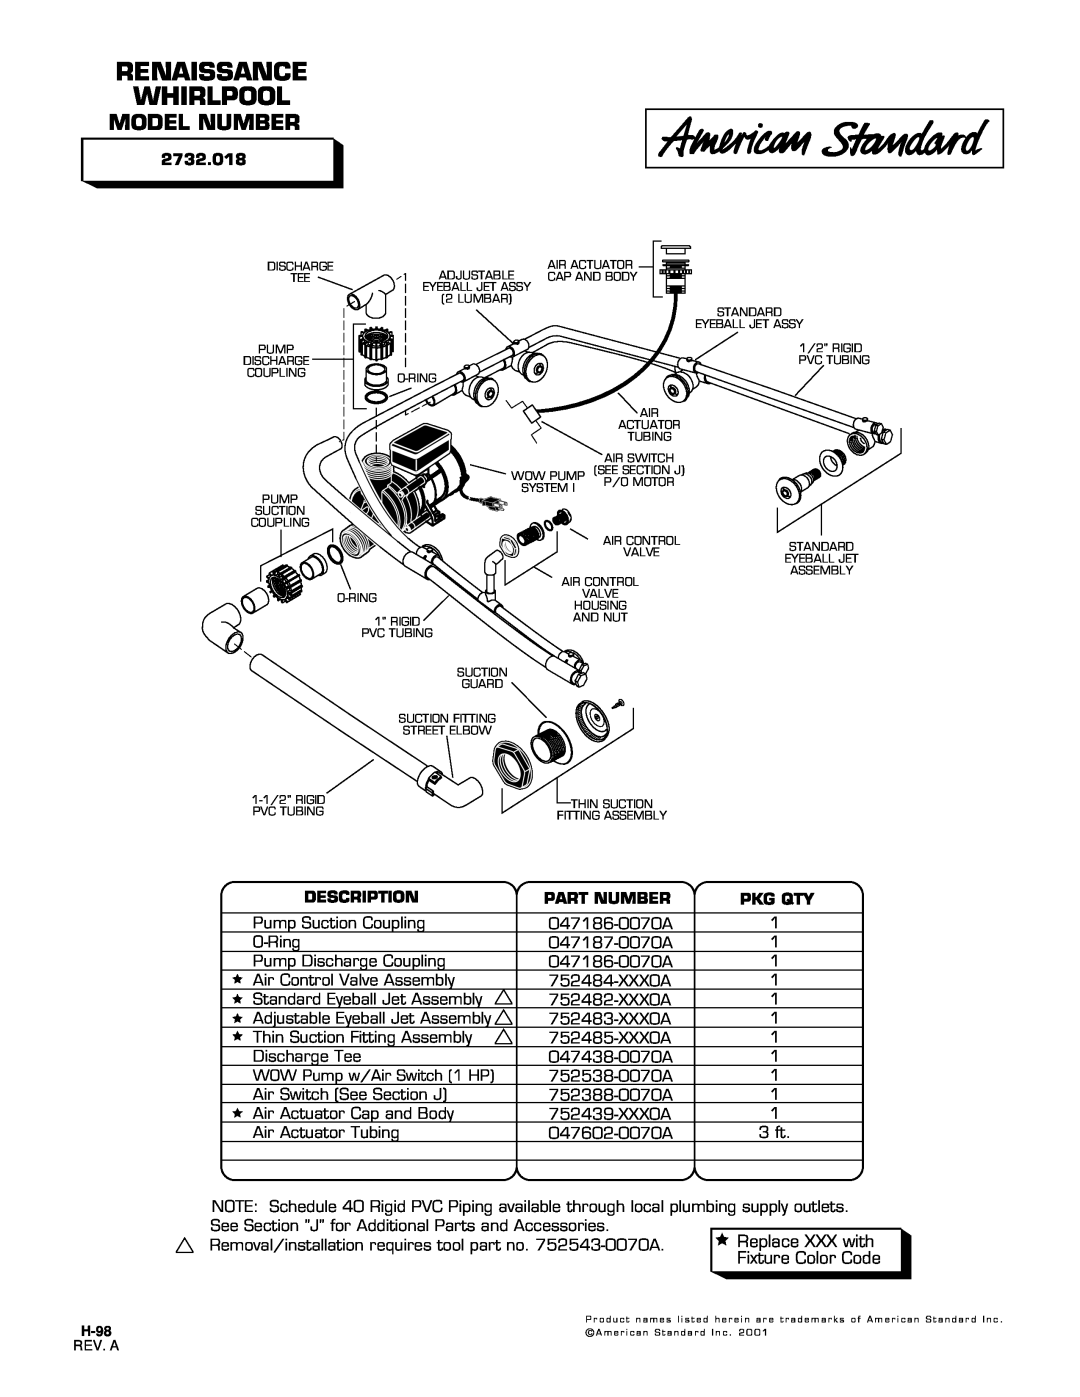 American Standard 752538-0070A manual Renaissance Whirlpool, Model Number, 2732.018, Description, Part Number, Pkg Qty 